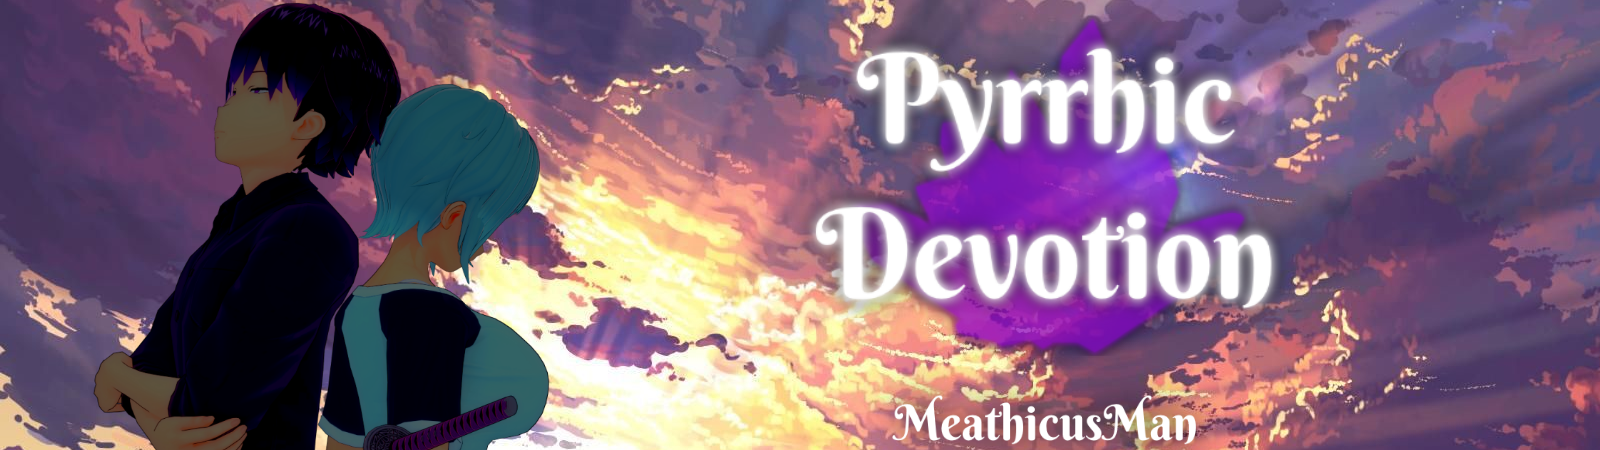 Pyrrhic Devotion by MeathicusMan